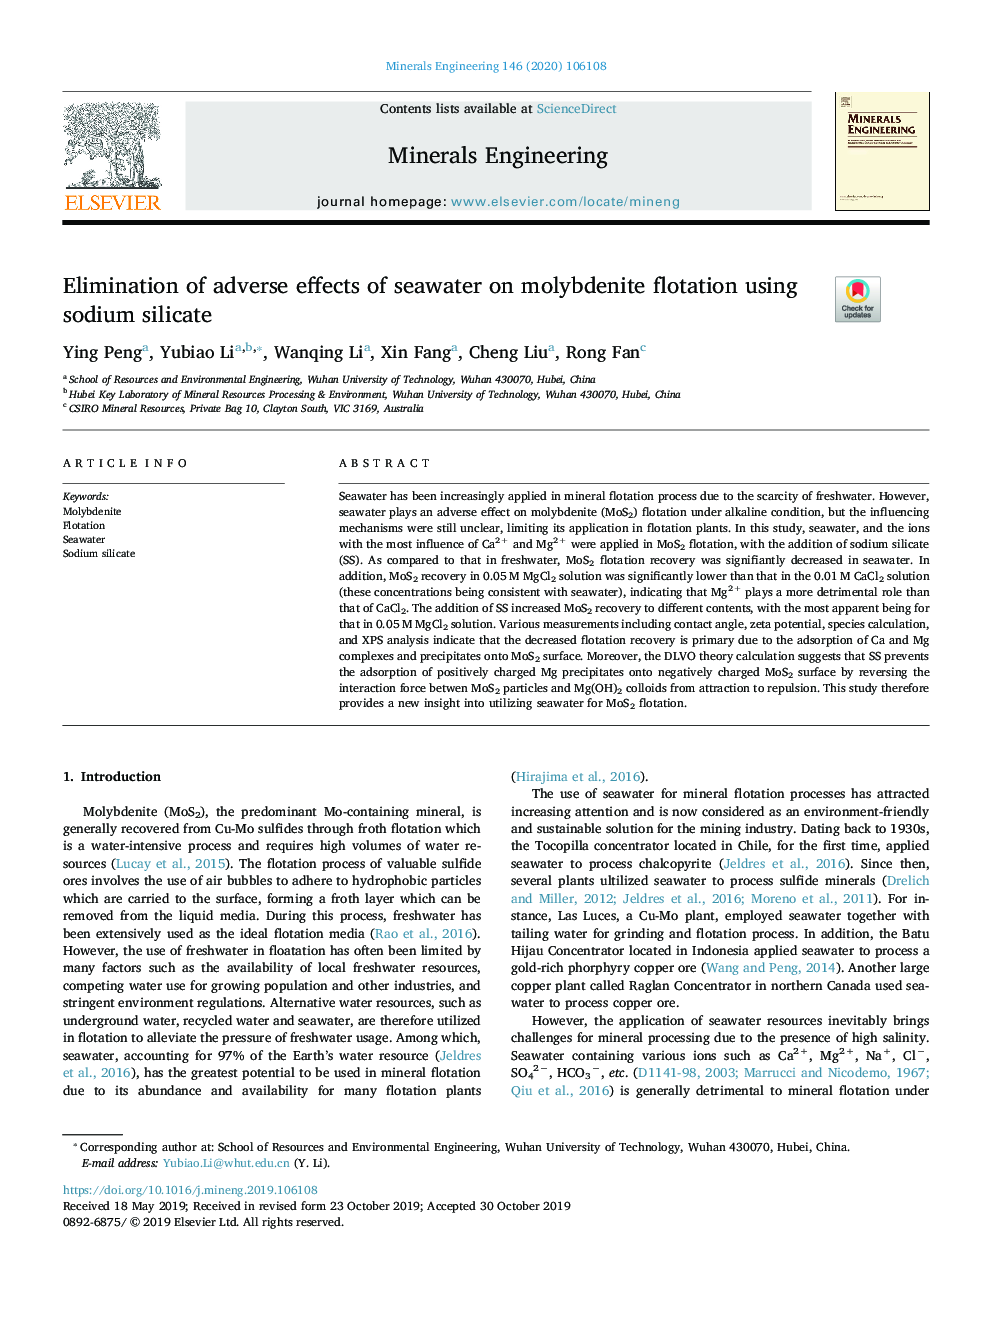 Elimination of adverse effects of seawater on molybdenite flotation using sodium silicate